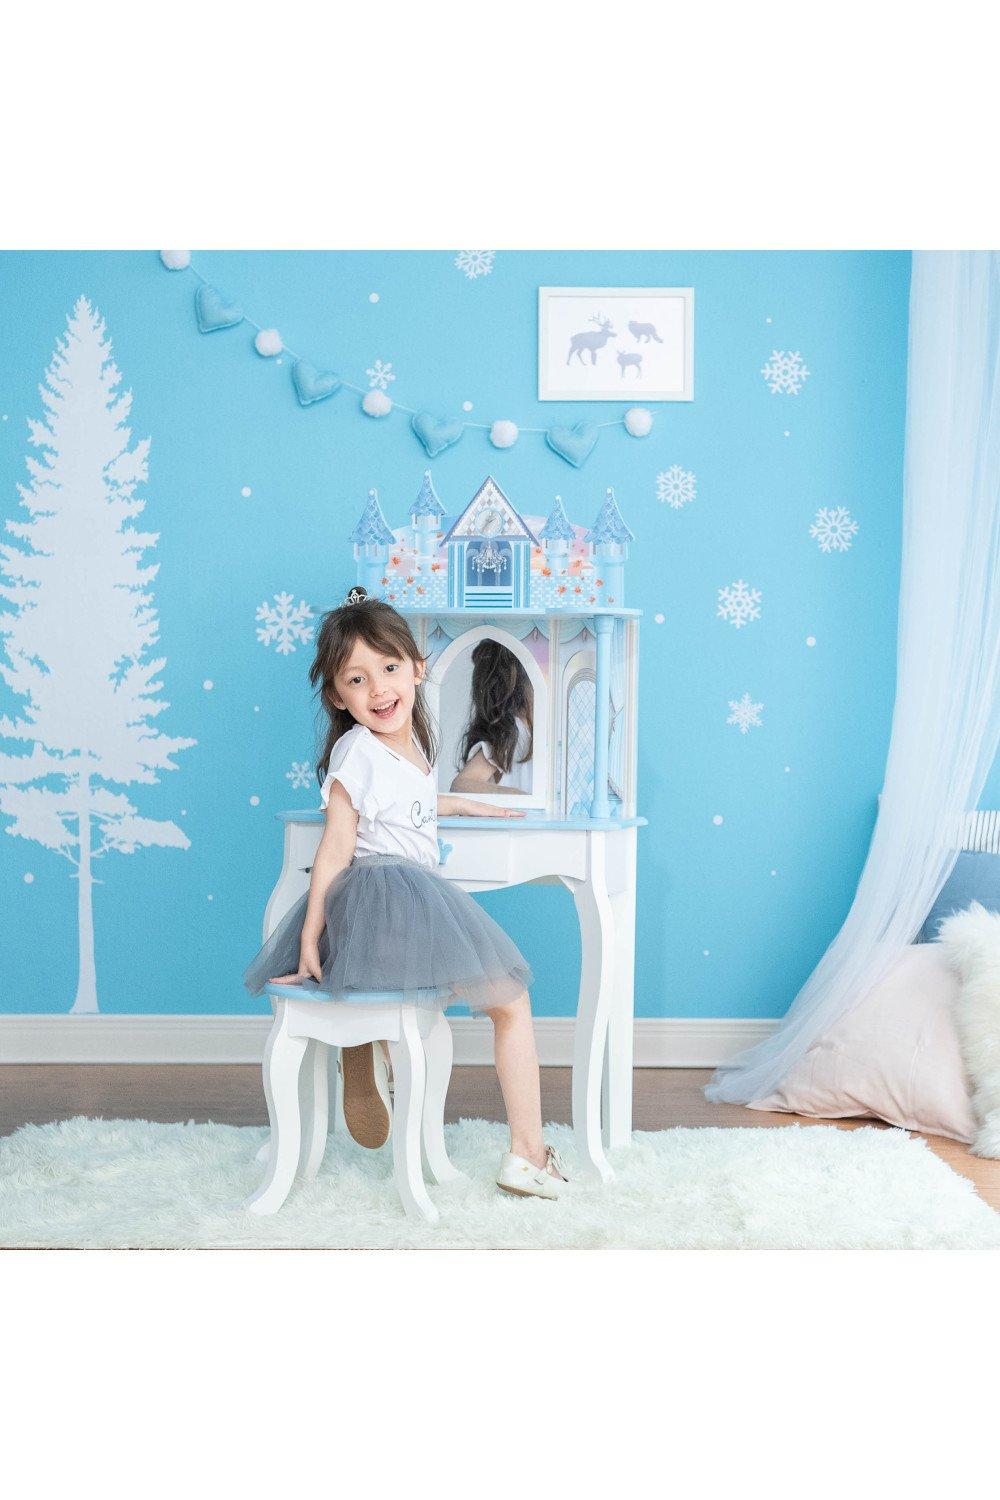 Teamson Kids Dreamland Castle 2-pc. Wooden Vanity Play Set, Blue/White